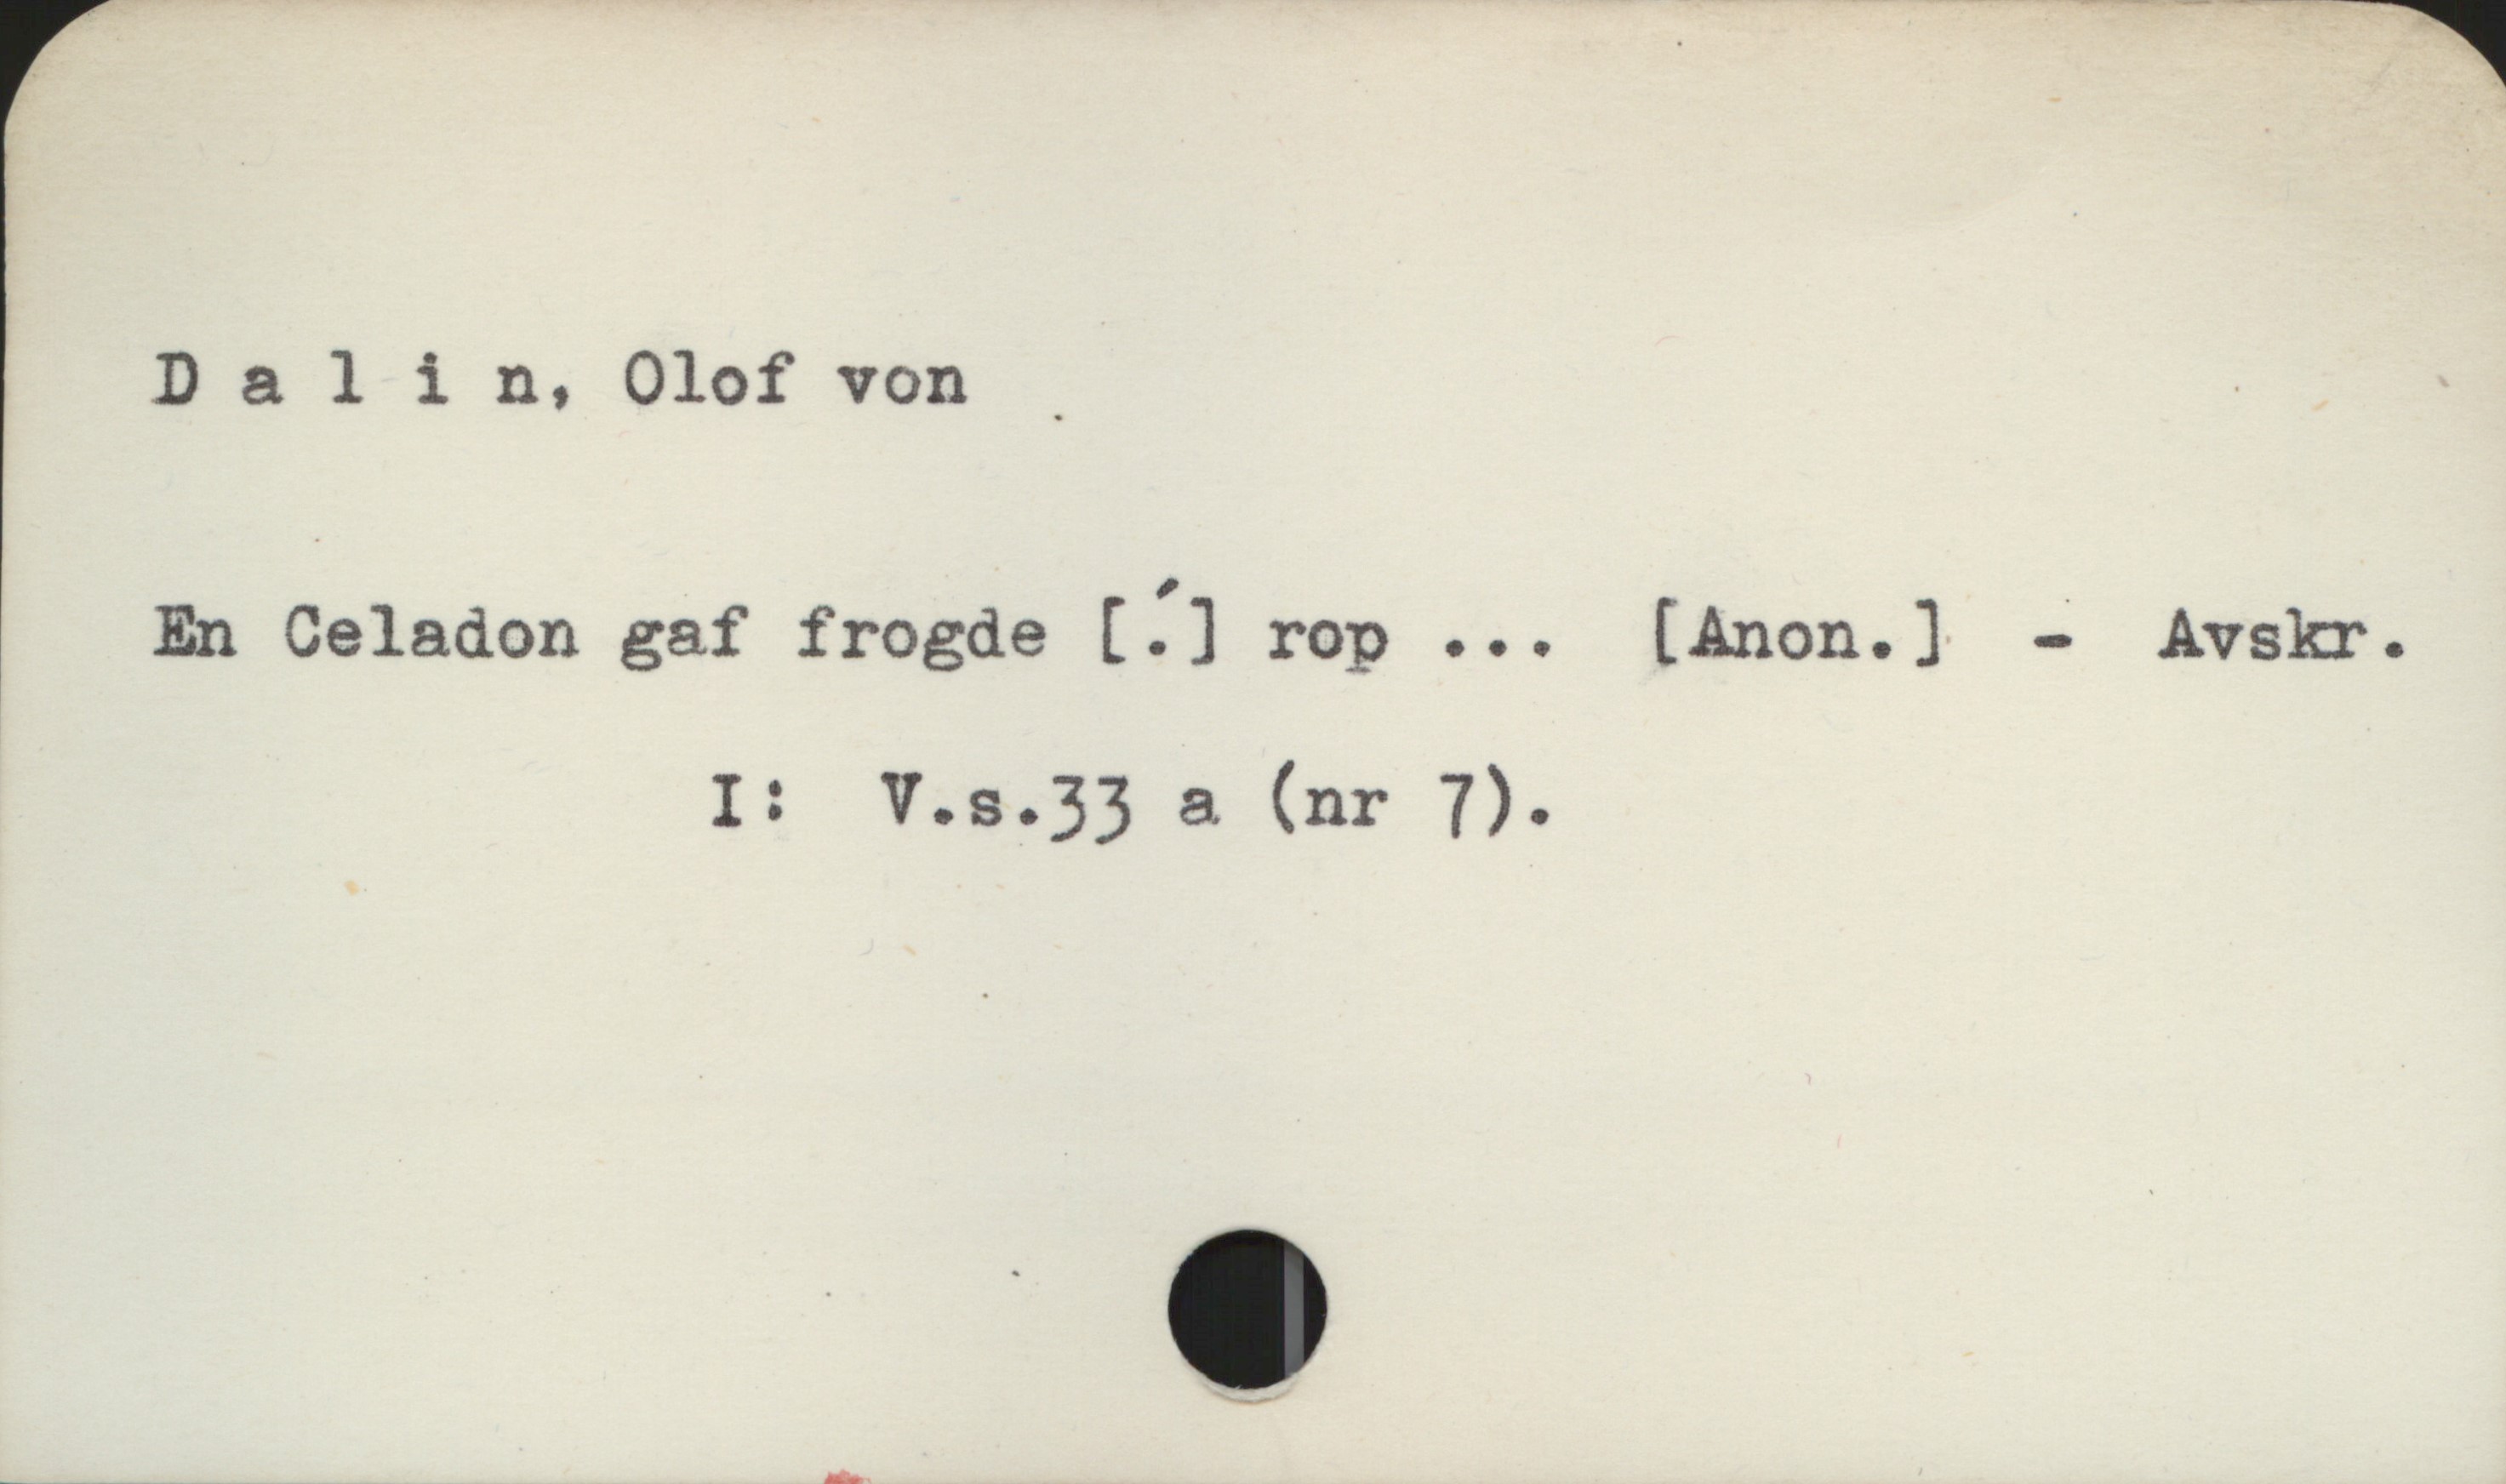 Dalin, Olof von Dalin, Olof von
En Celadon gaf frogde [.] rop ... [Anon.] - Avskr.
I: V.s.33 a (nr 7).